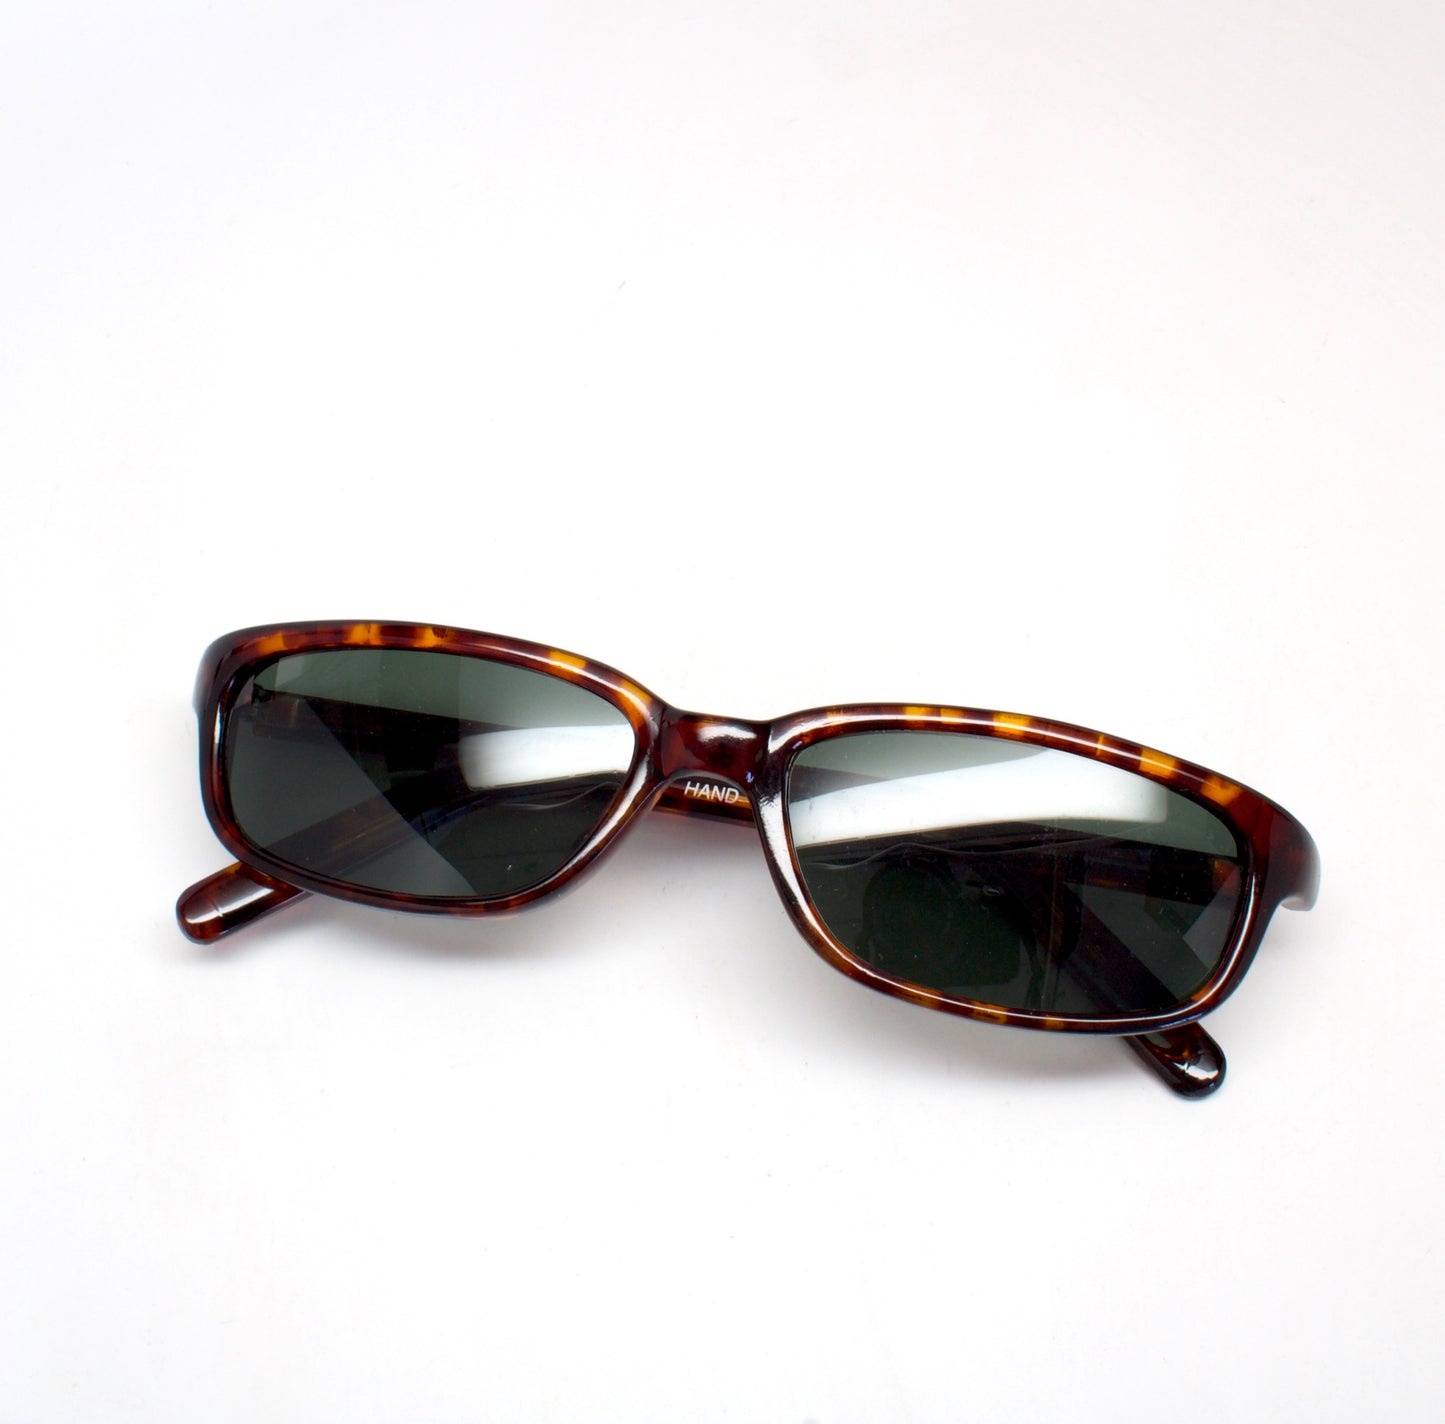 Vintage Small Size Narrow Frame Slim Rectangle Sunglasses - Tortoise